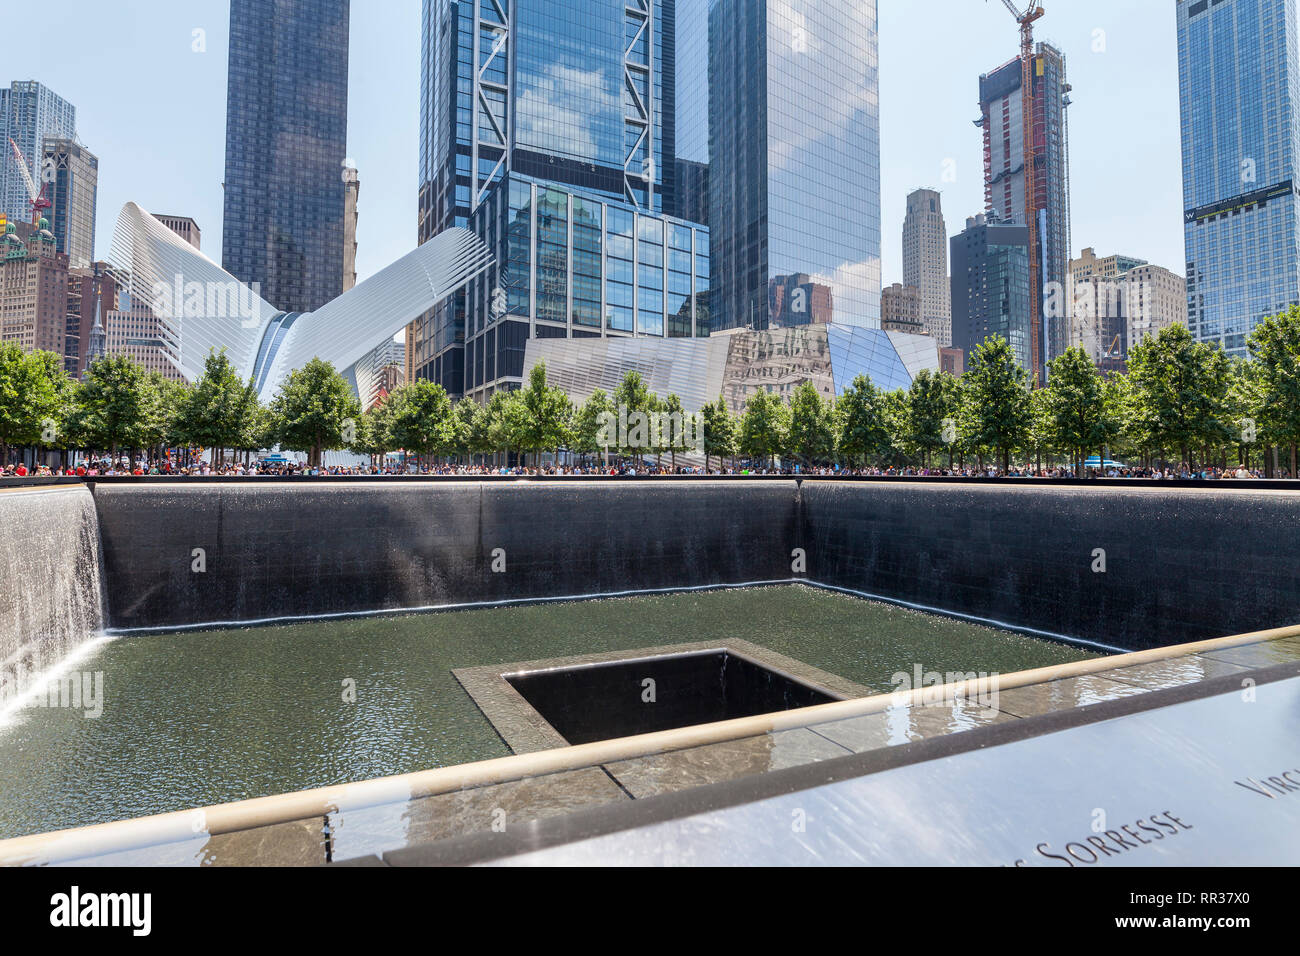 World Trade Center le 11 septembre 2001 Sud, Piscine à débordement Memorial Lower Manhattan, New York, NY, USA Banque D'Images